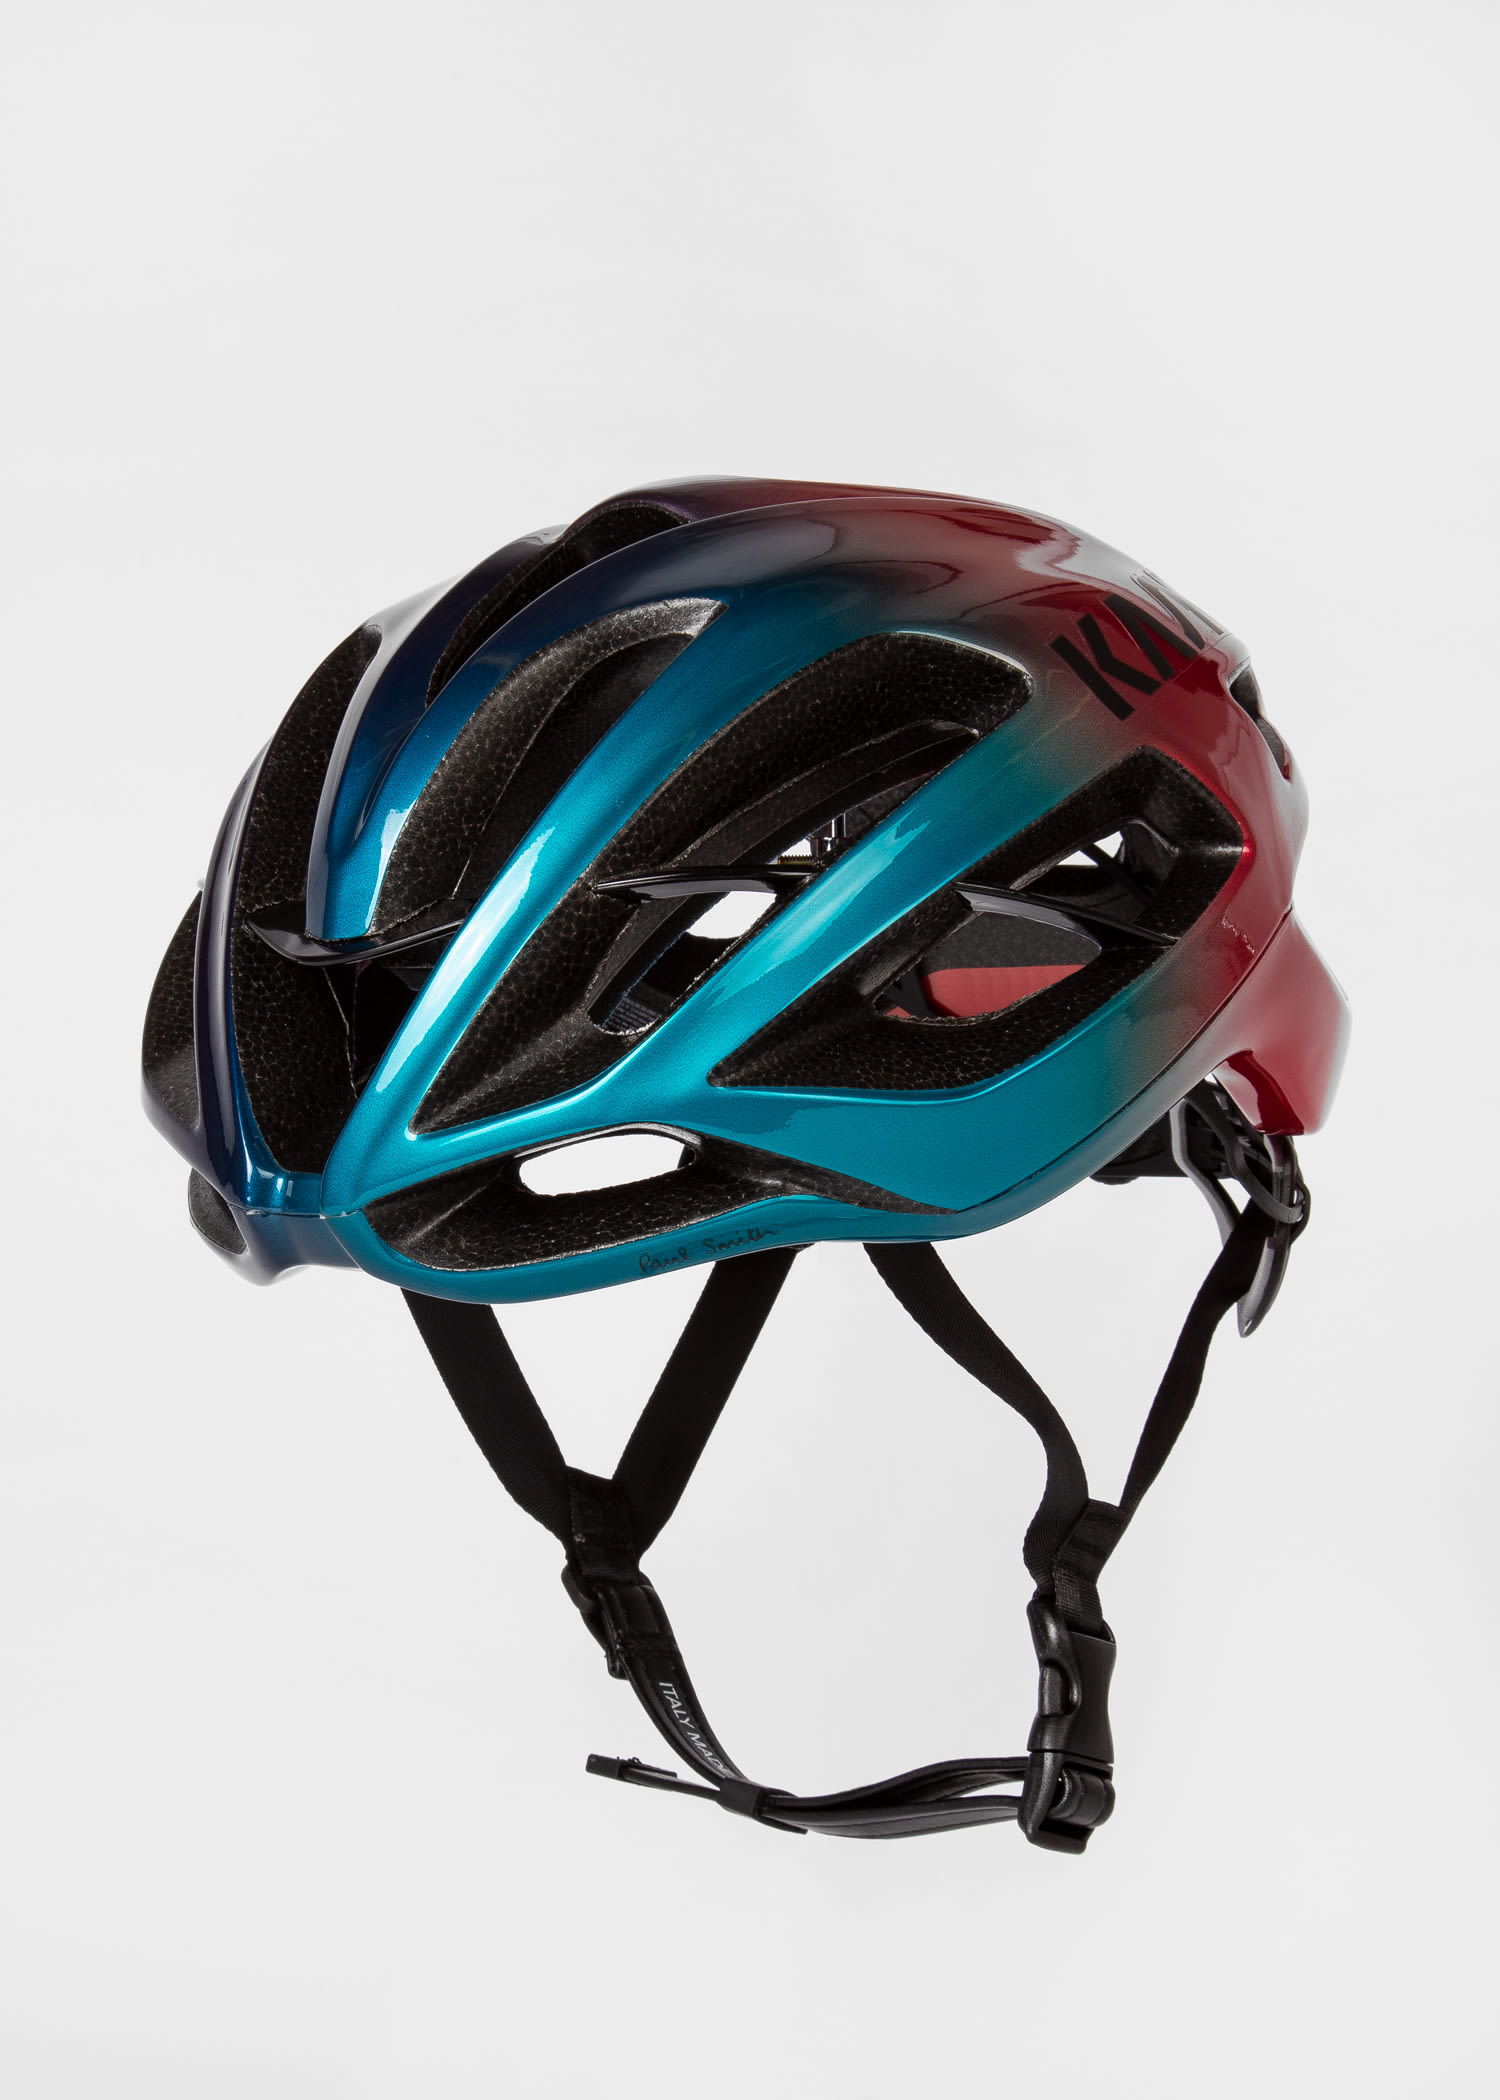 Paul Smith + Kask 'Artist Stripe Fade' Proton Cycling Helmet - Paul Smith